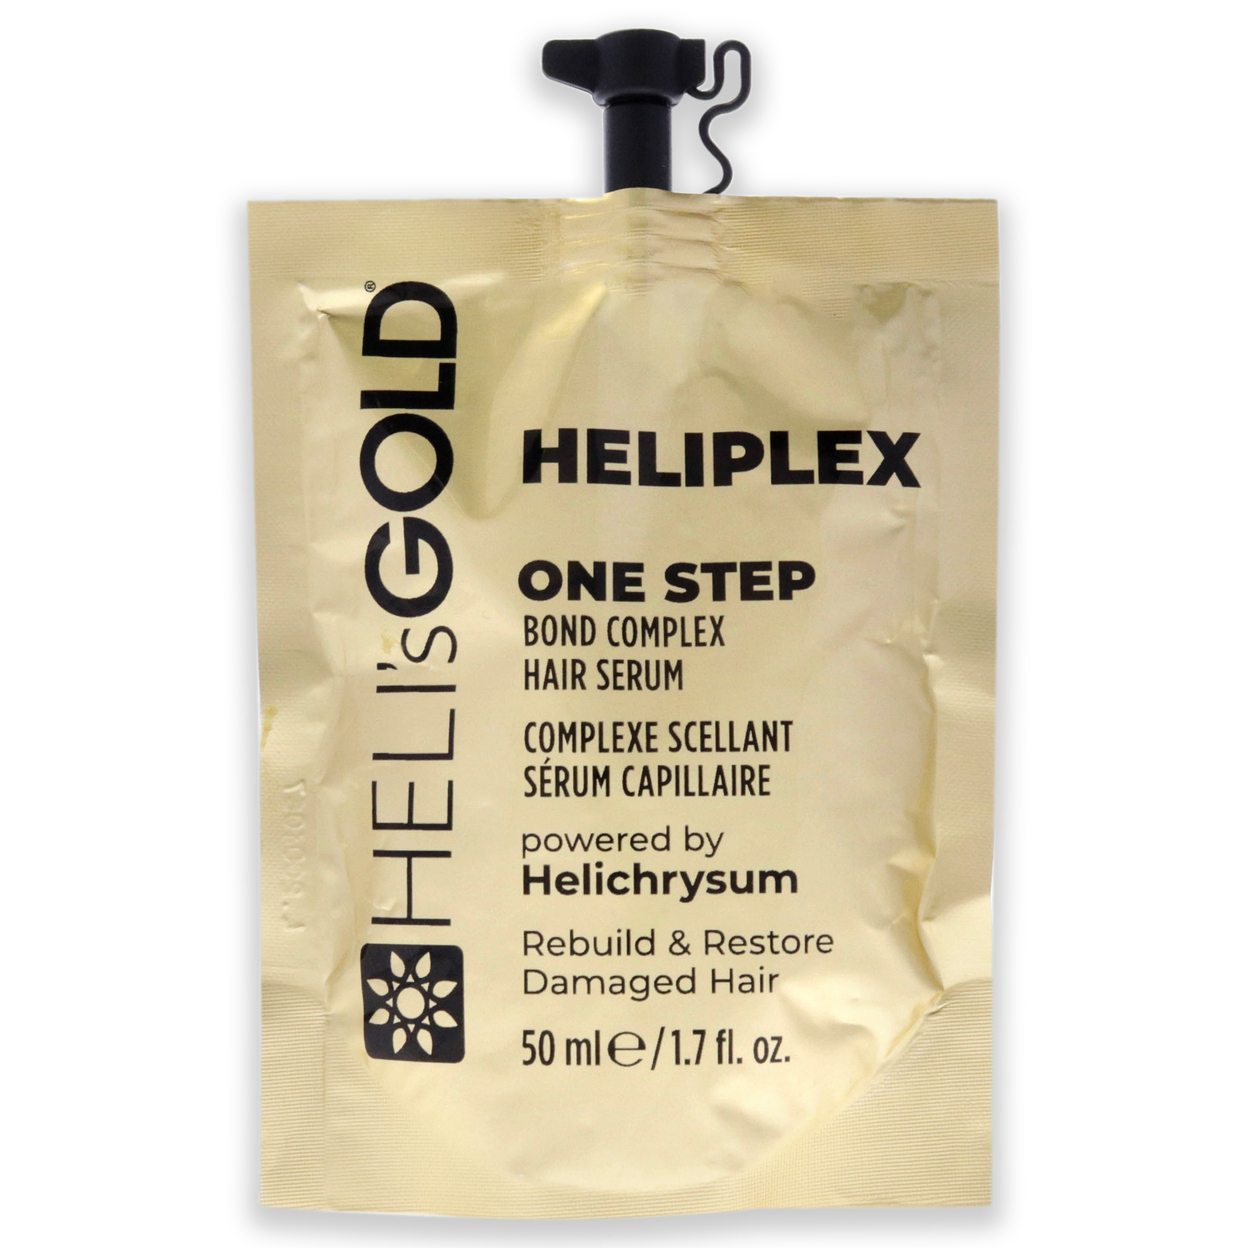 Helis Gold Heliplex One Step Hair Serum 1.7 Oz